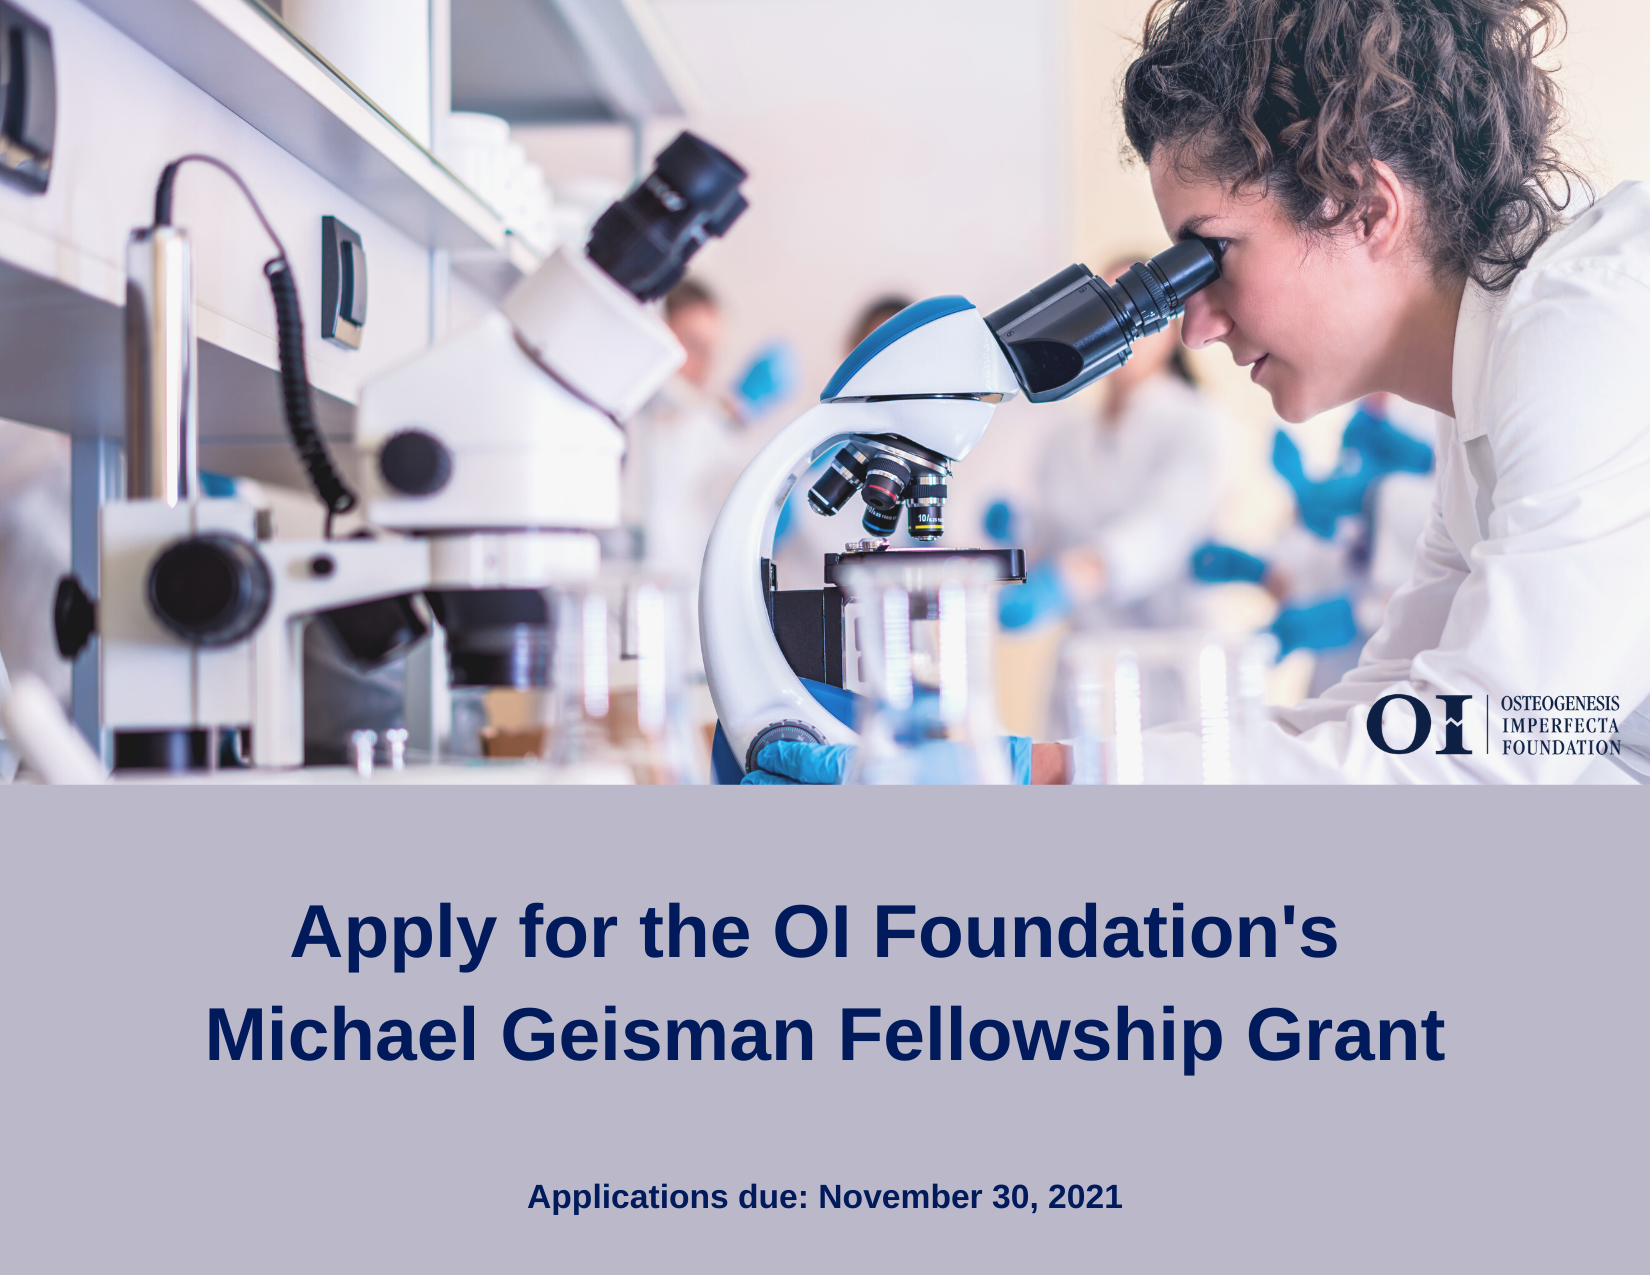 Michael Geisman Fellowship Grant